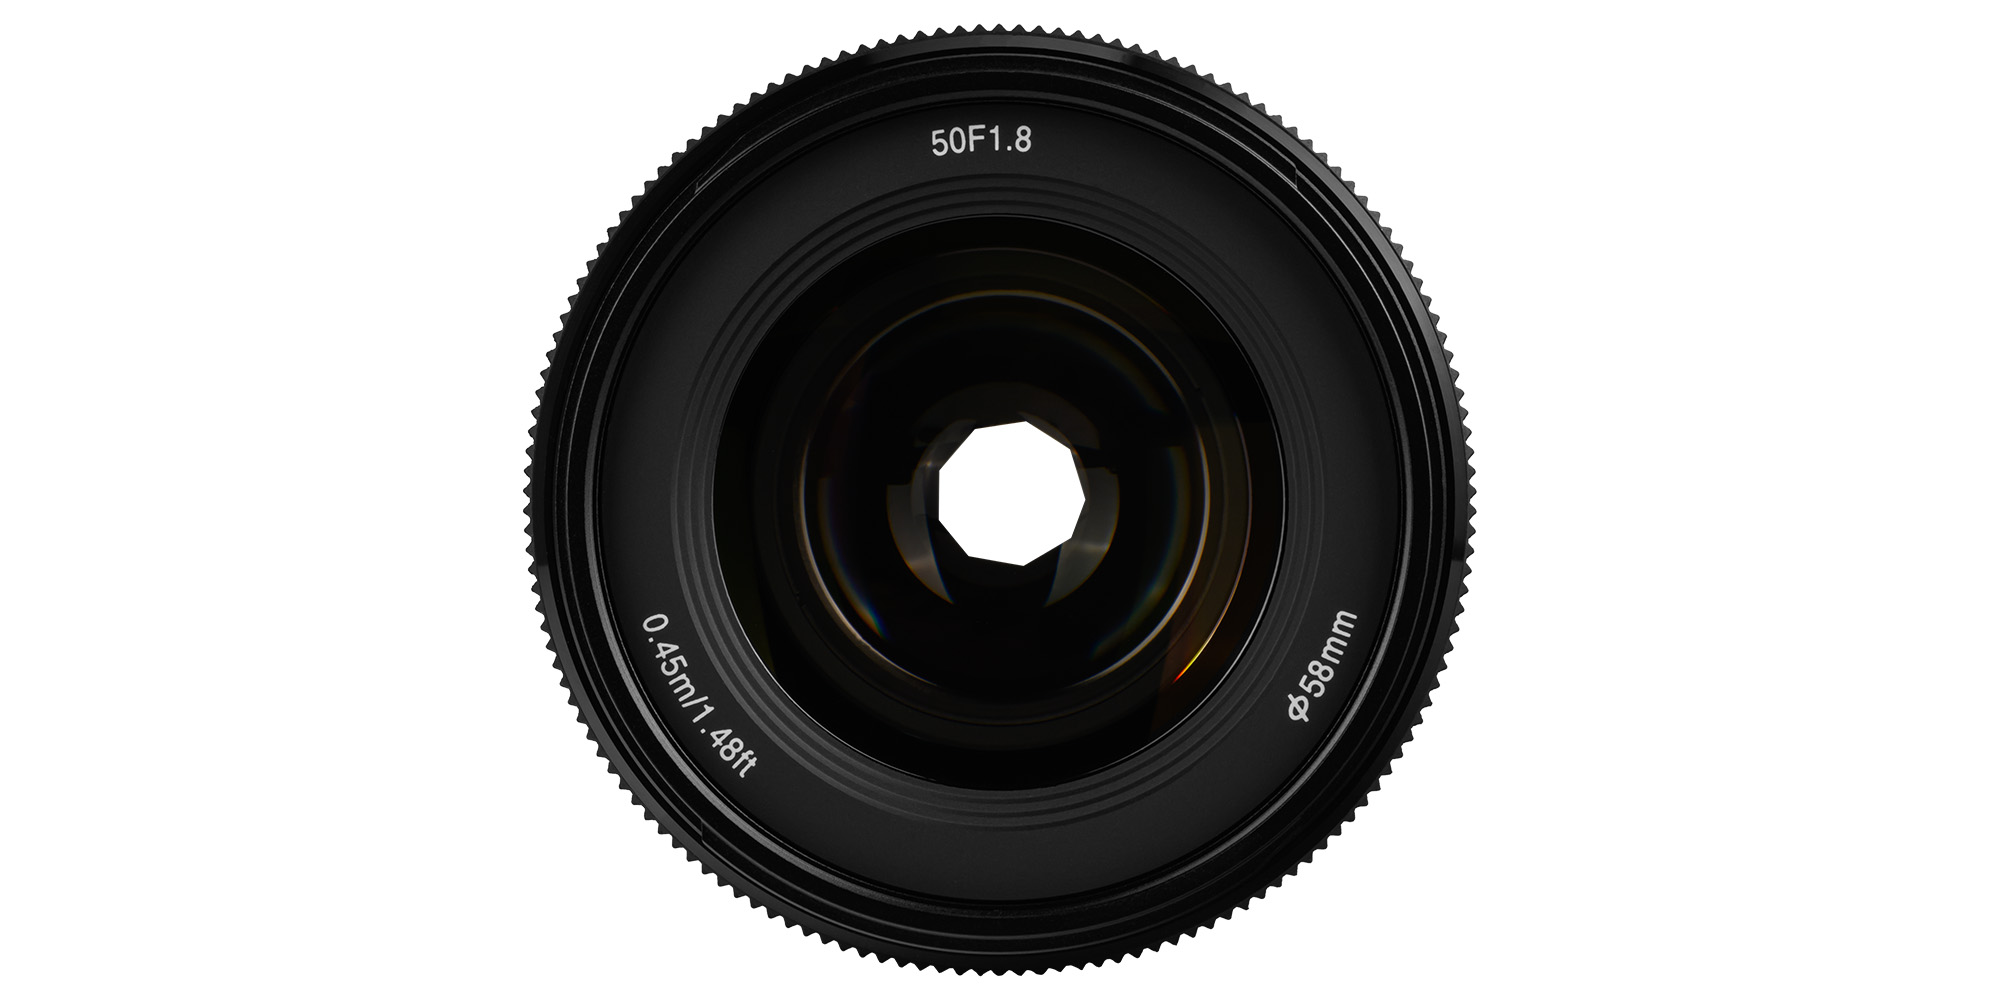 Obiektyw Yongnuo YN 50 mm f/1,8 DF DSM do Nikon Z